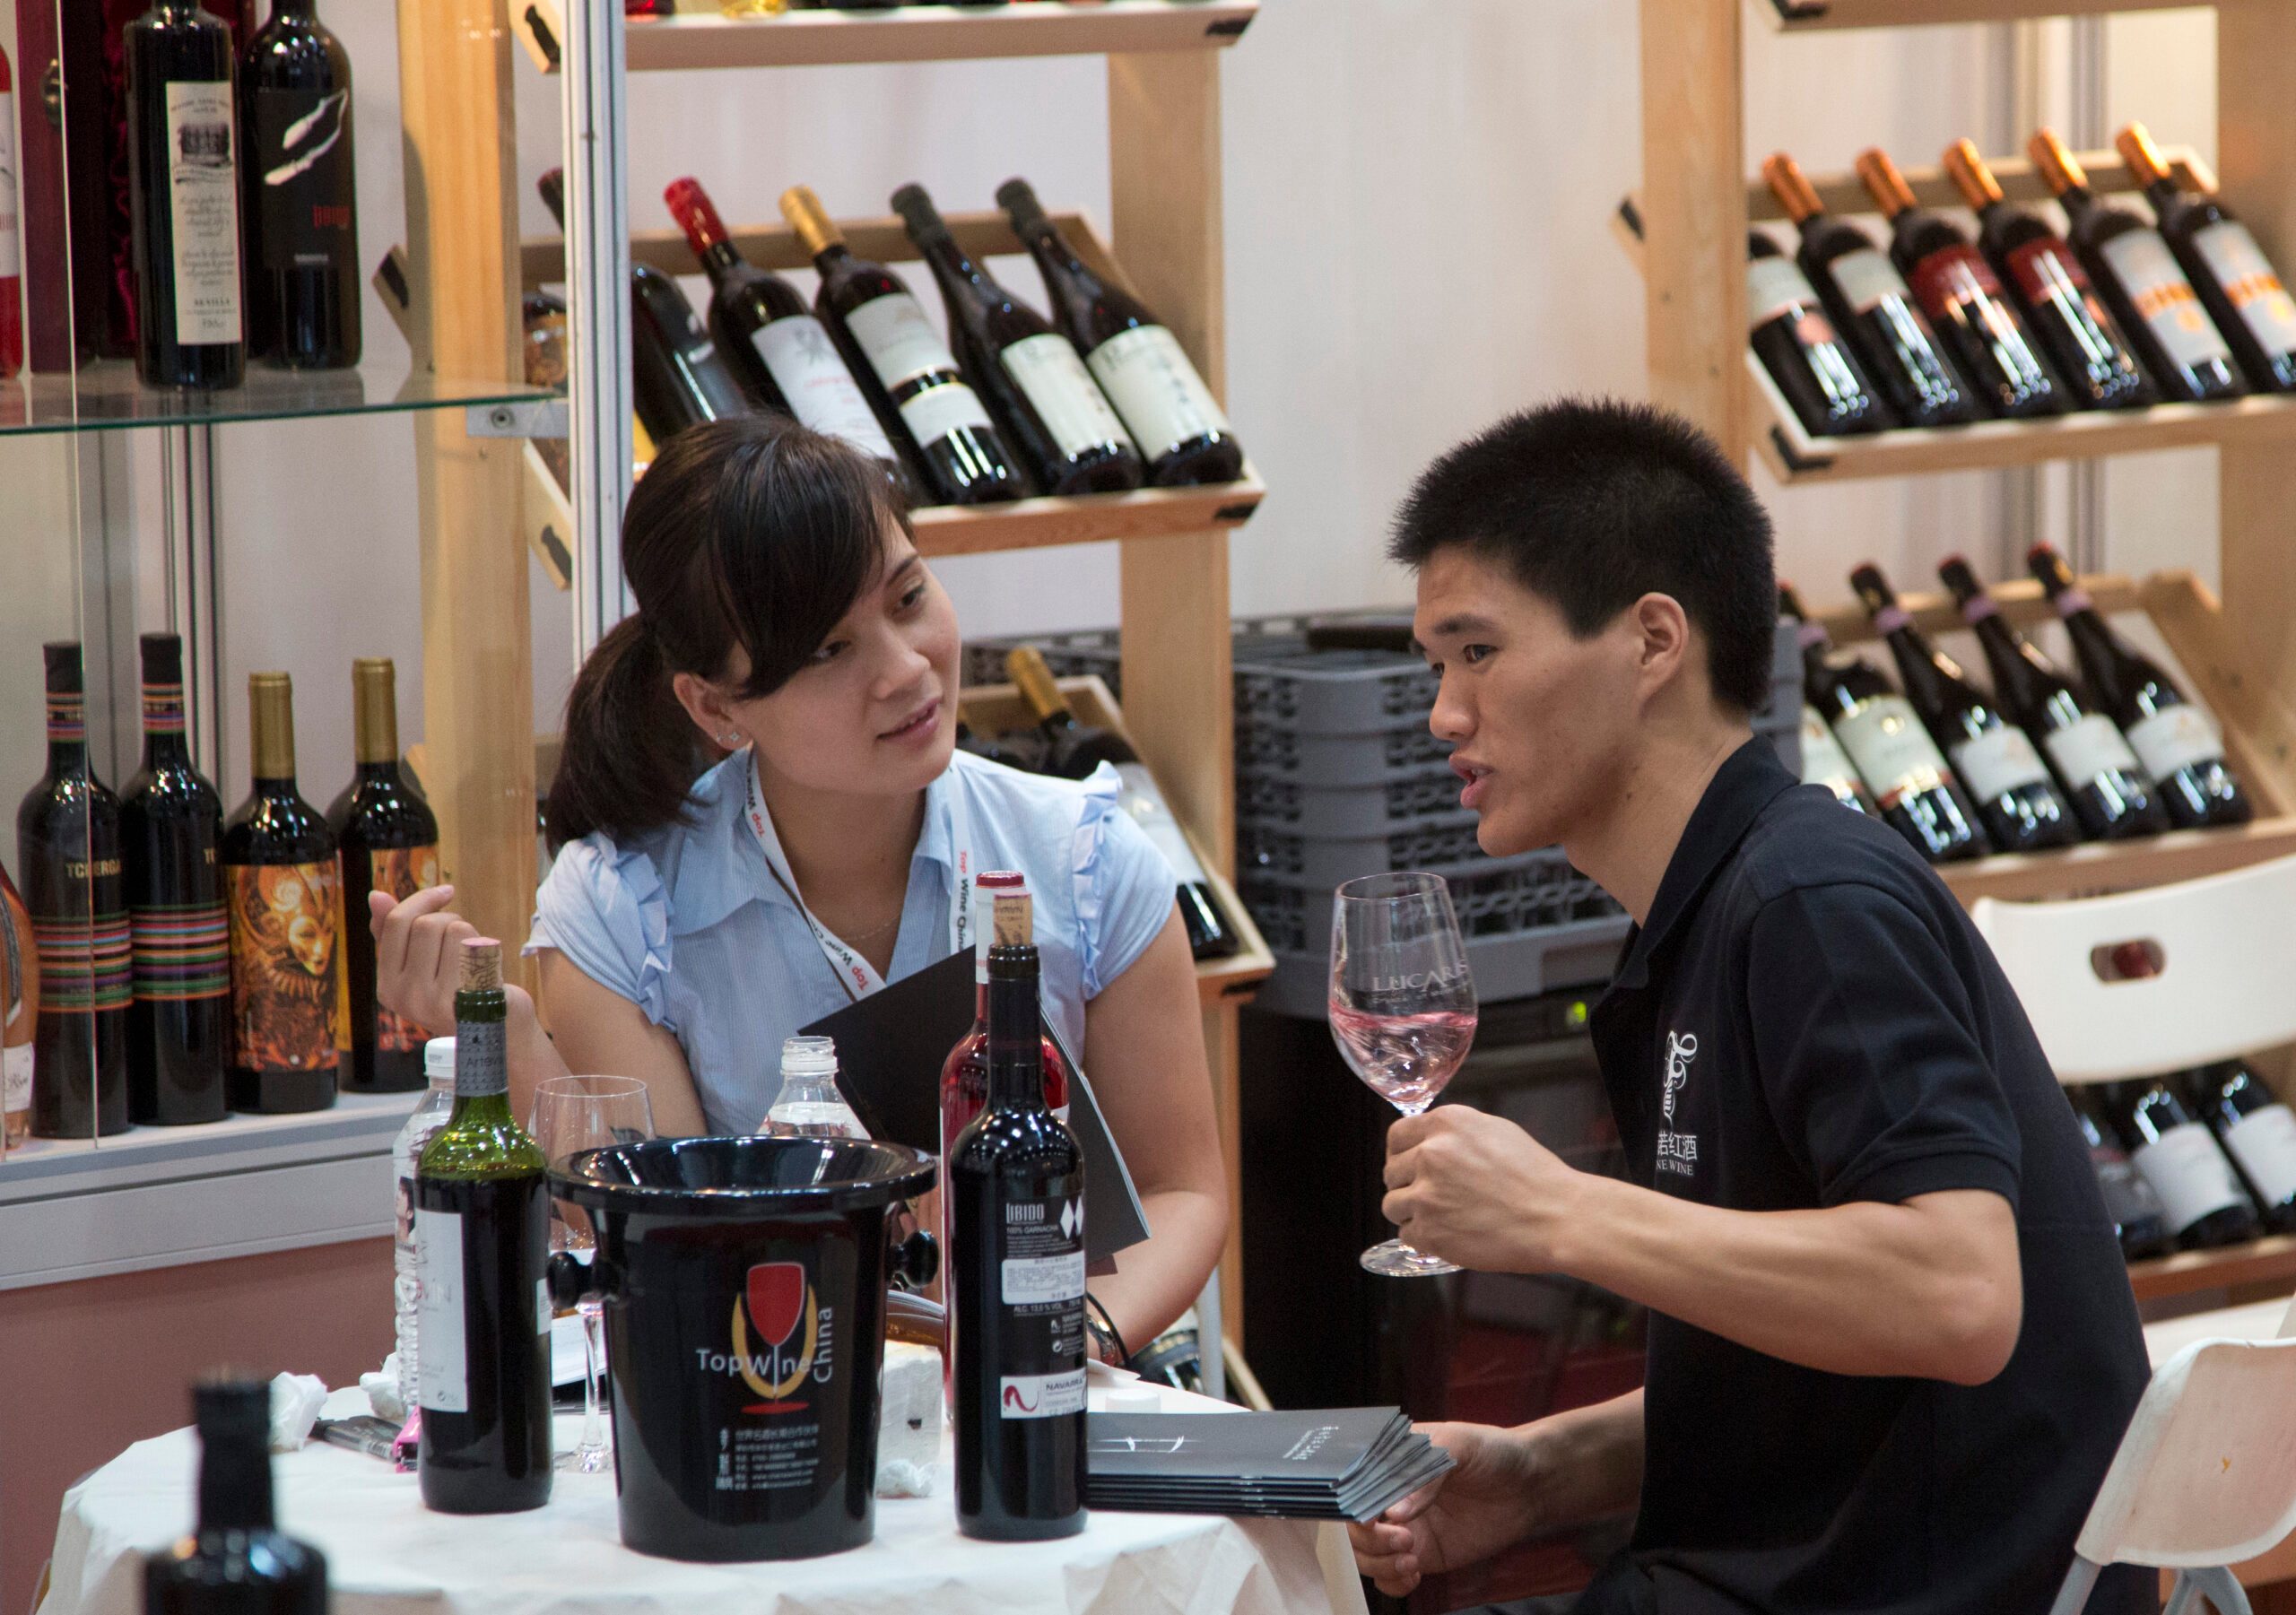 China wields increasing power in world wine market – study